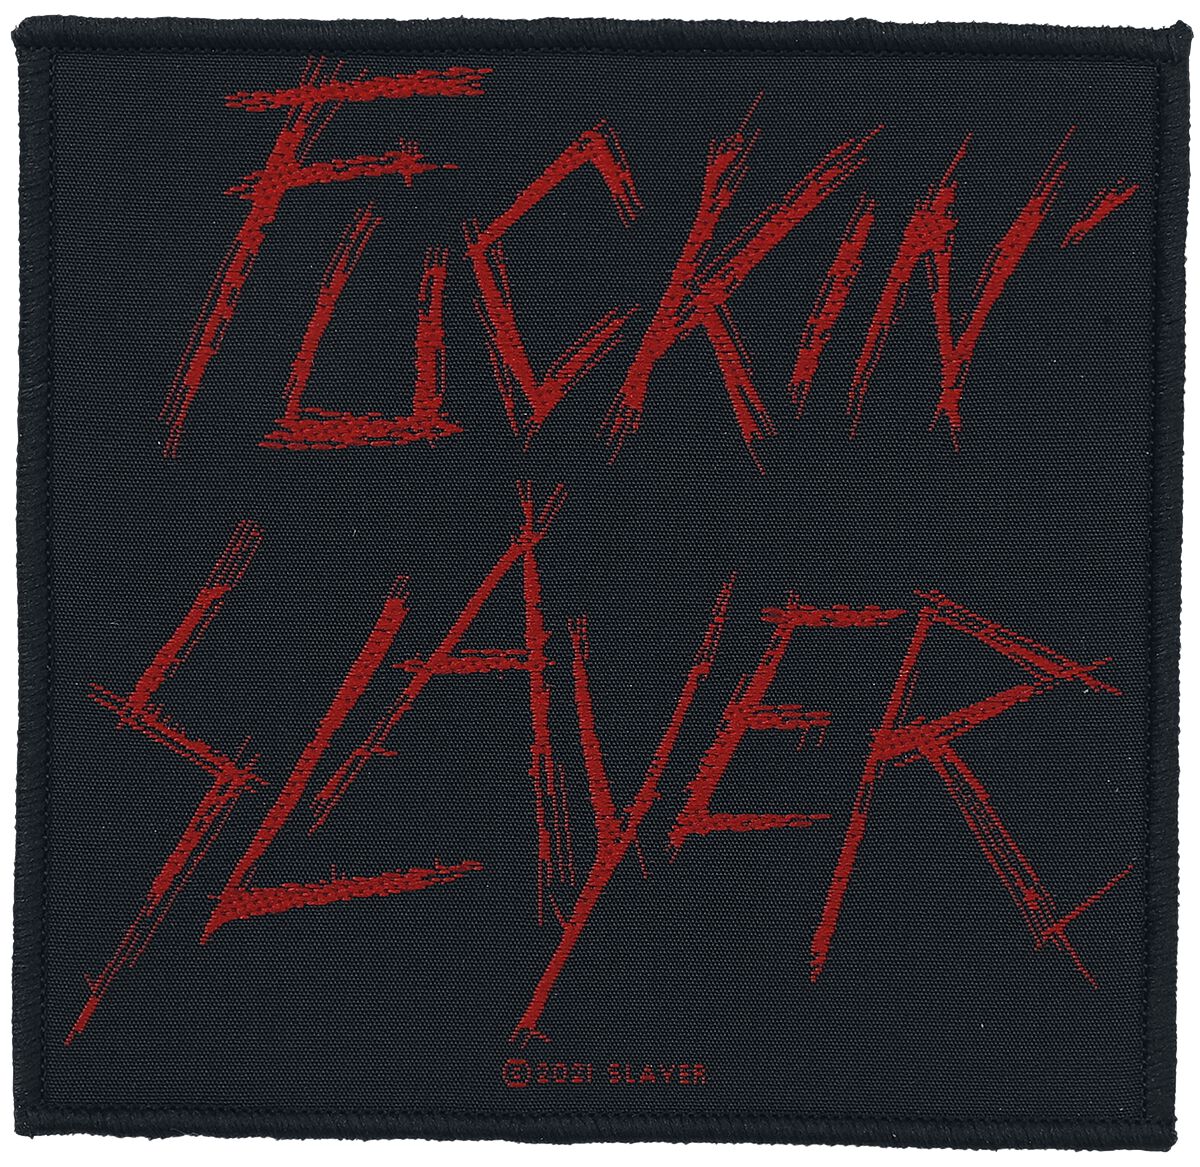 Slayer Slayer Patch schwarz rot